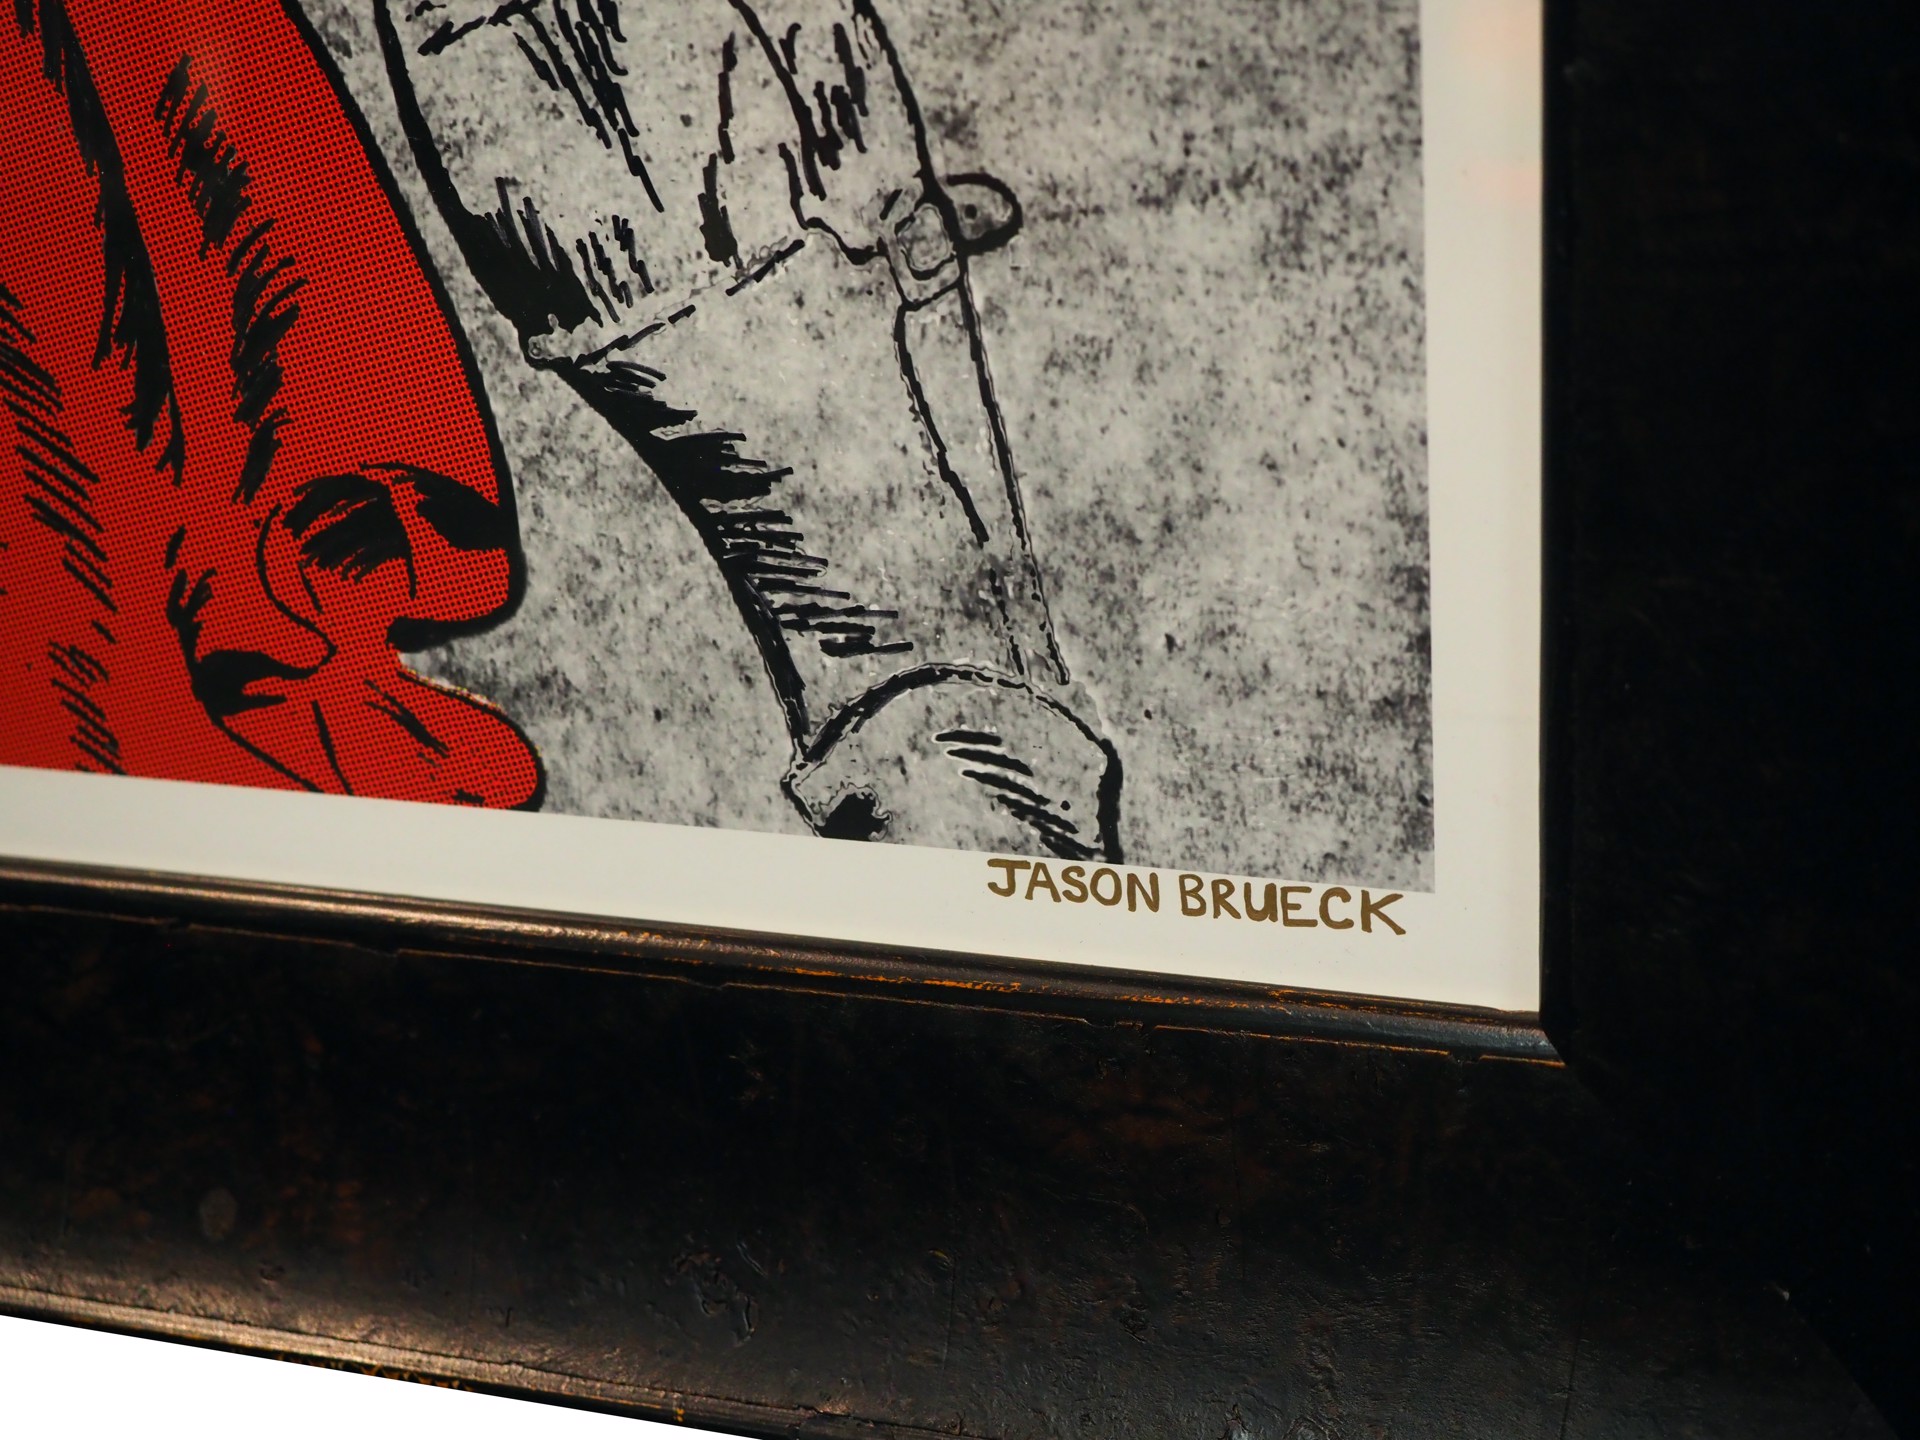 Inked (Ed. 1/10) by Jason Brueck